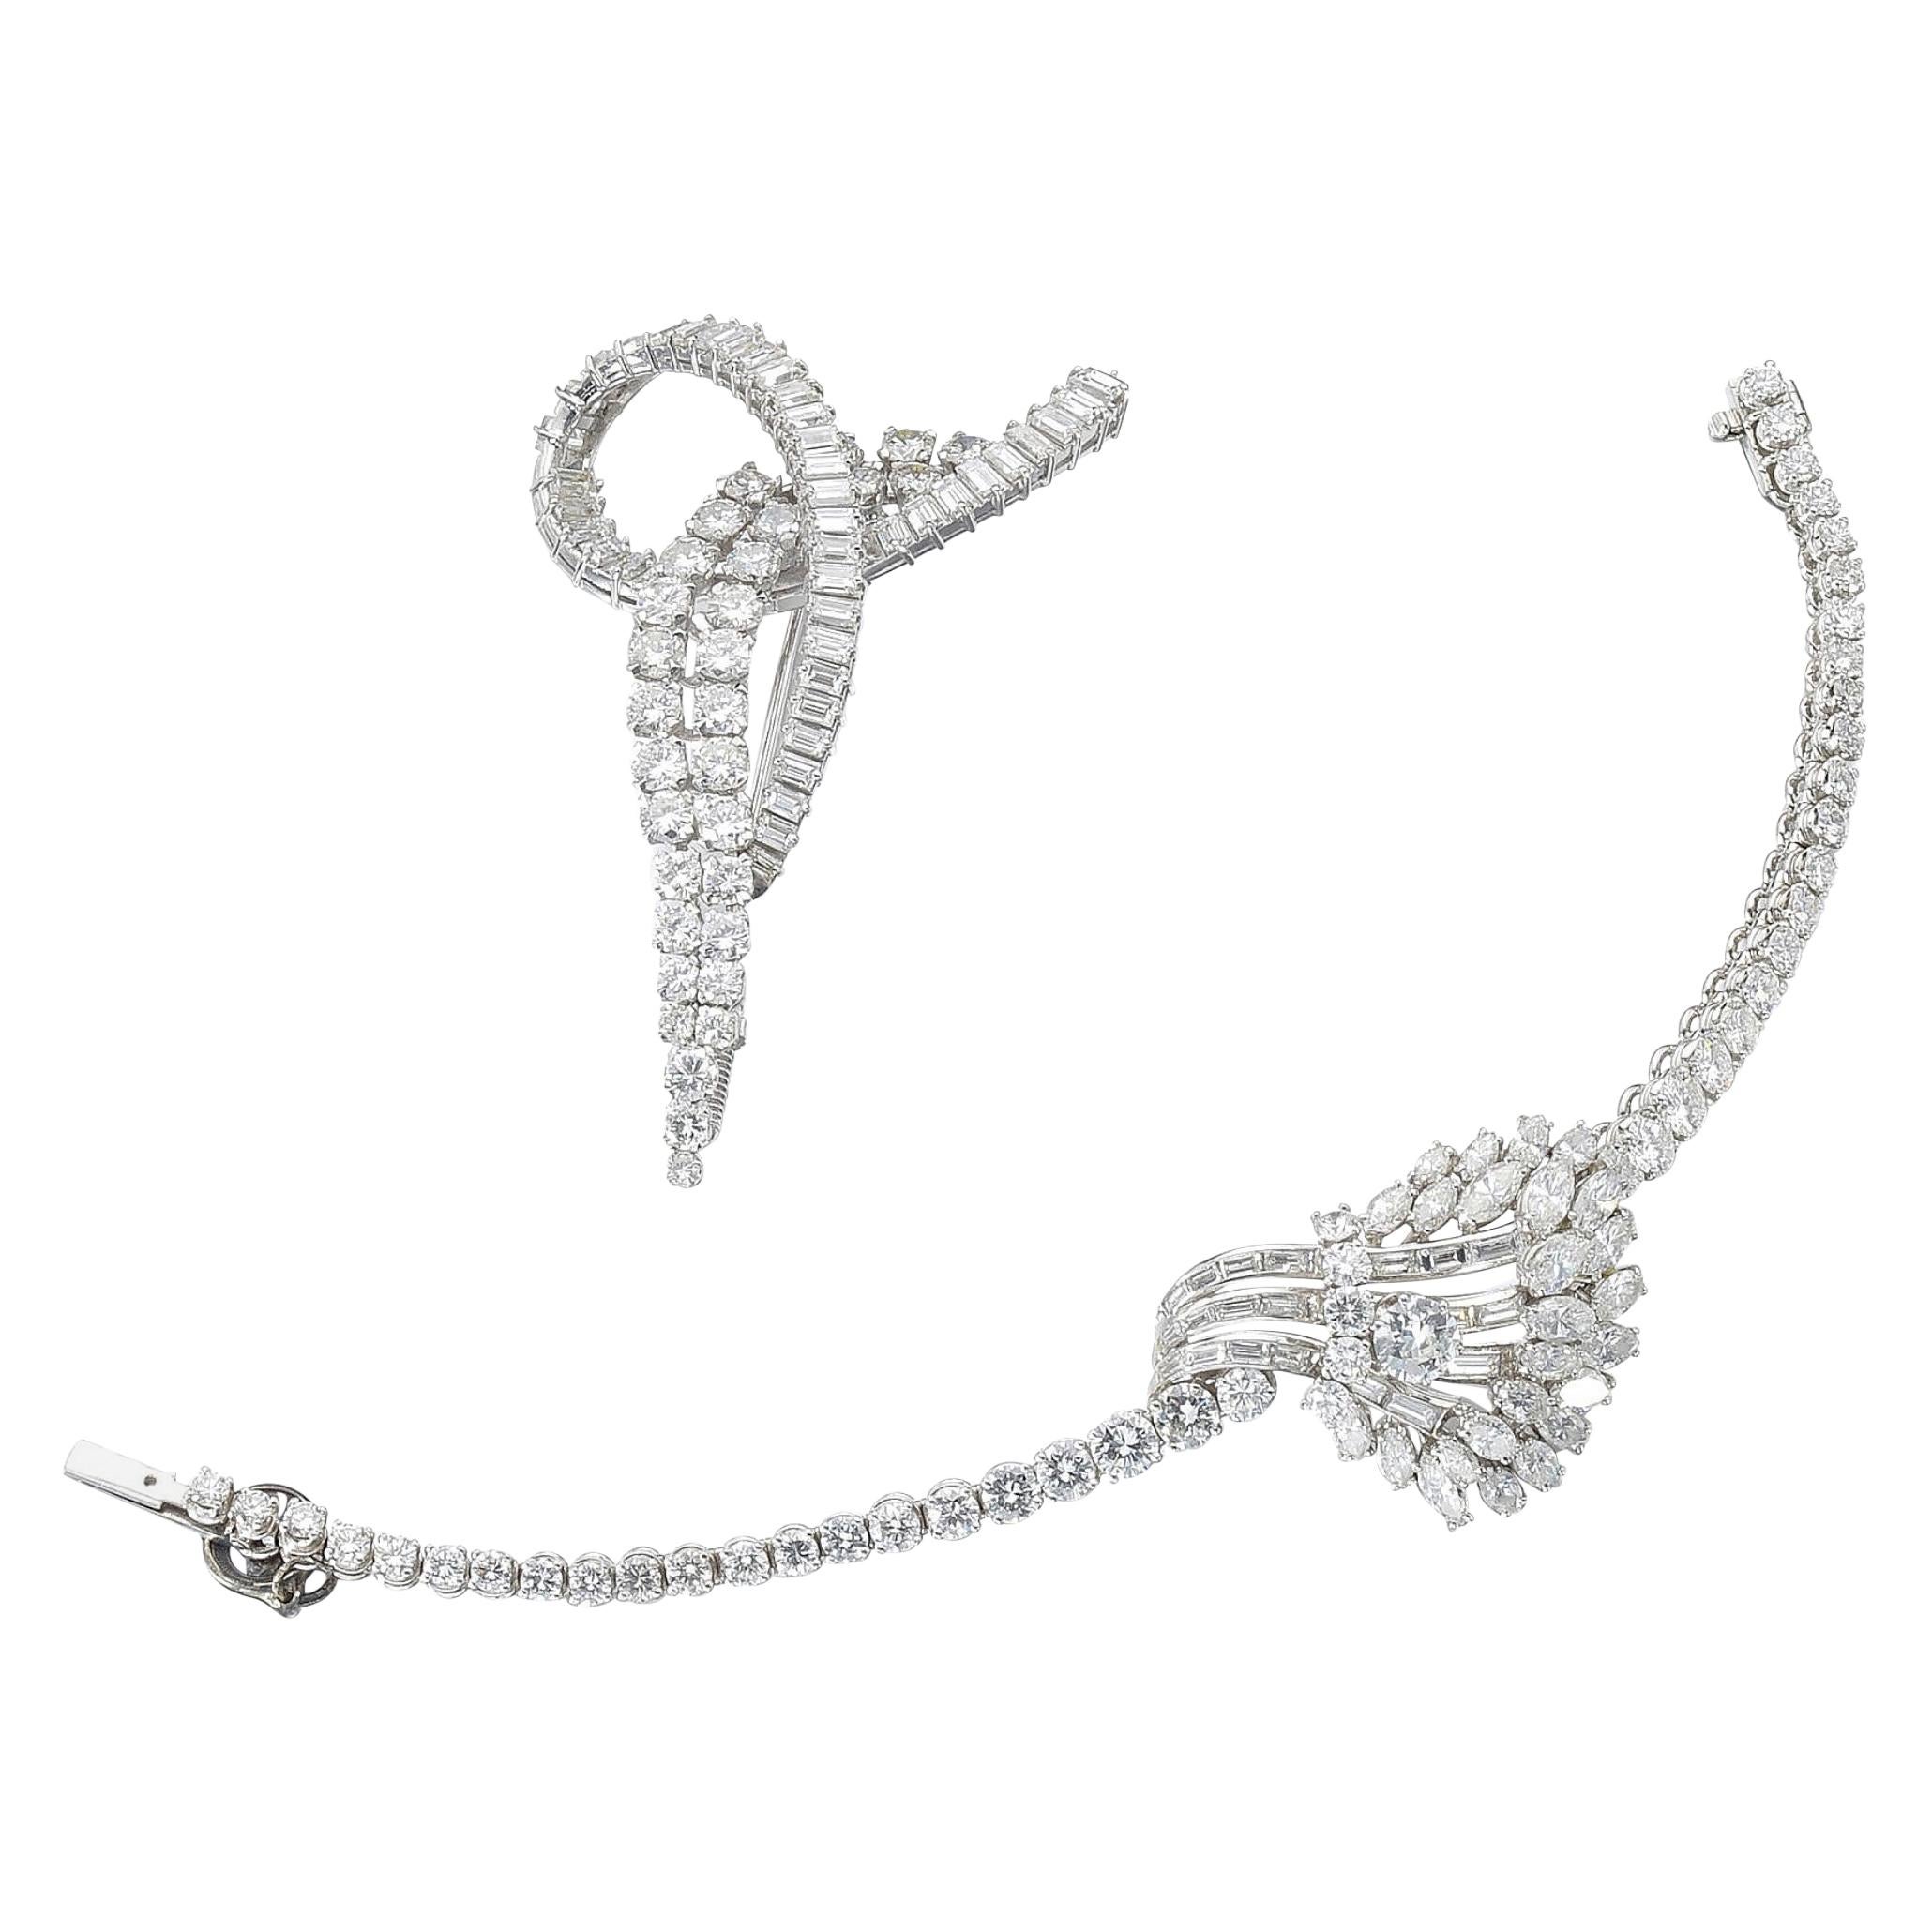 Diamond Brooch and a Diamond Bracelet '17 to 19 carats total', Set on Platinum